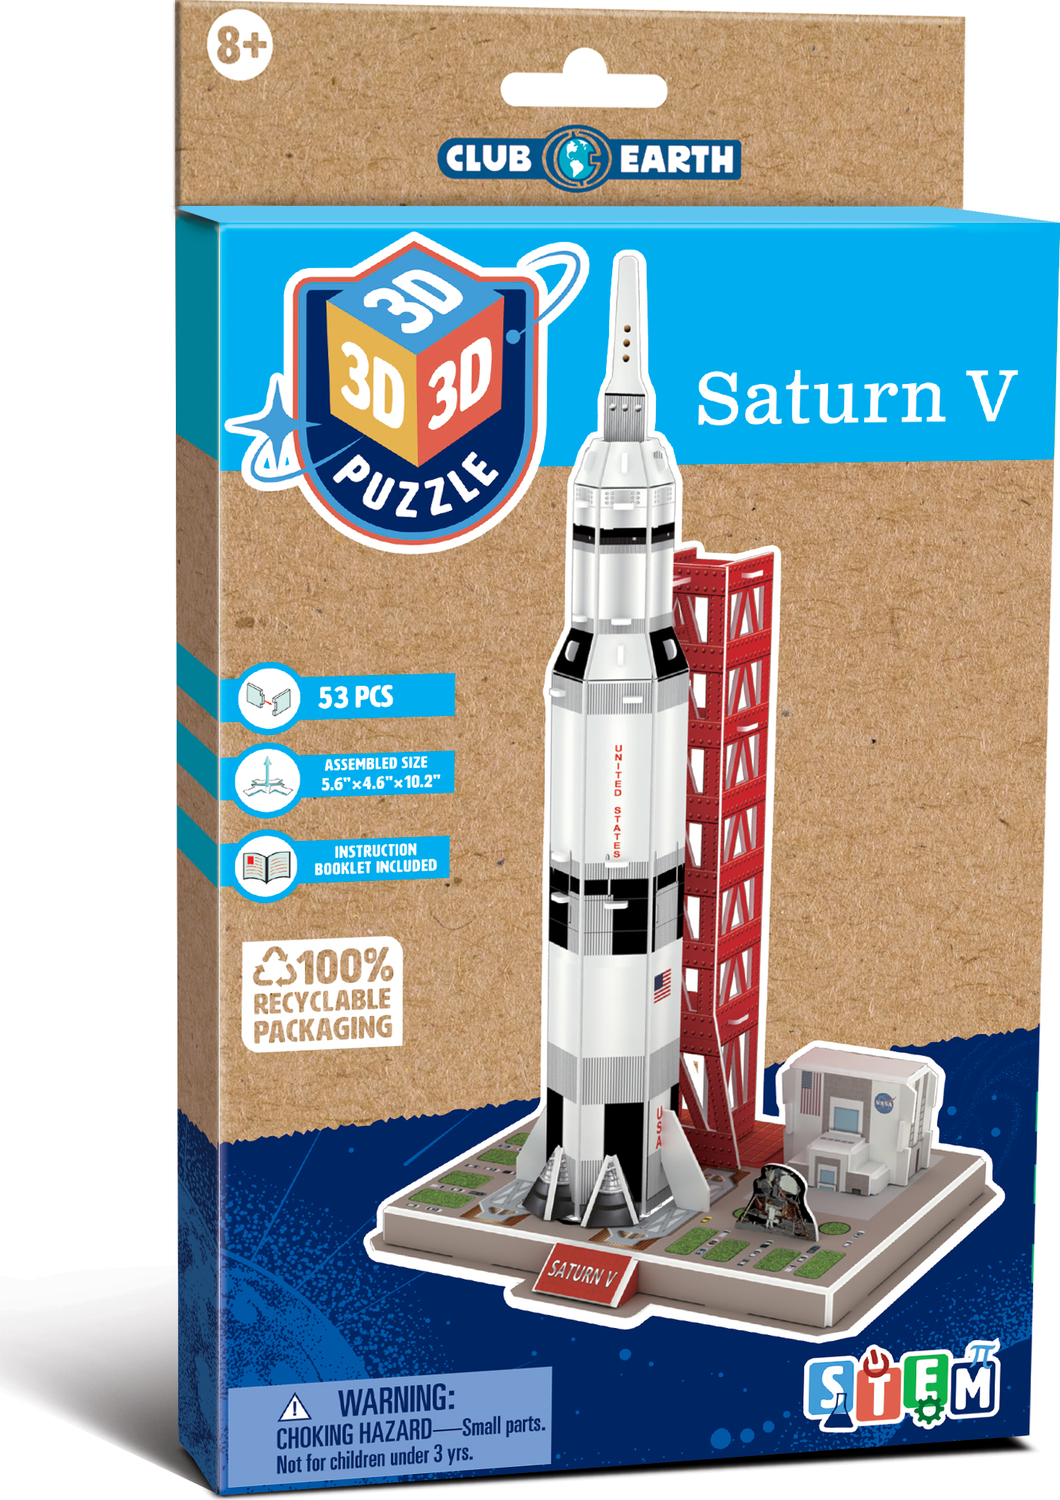 Saturn V 3D Puzzle - Fairhaven Toy Garden